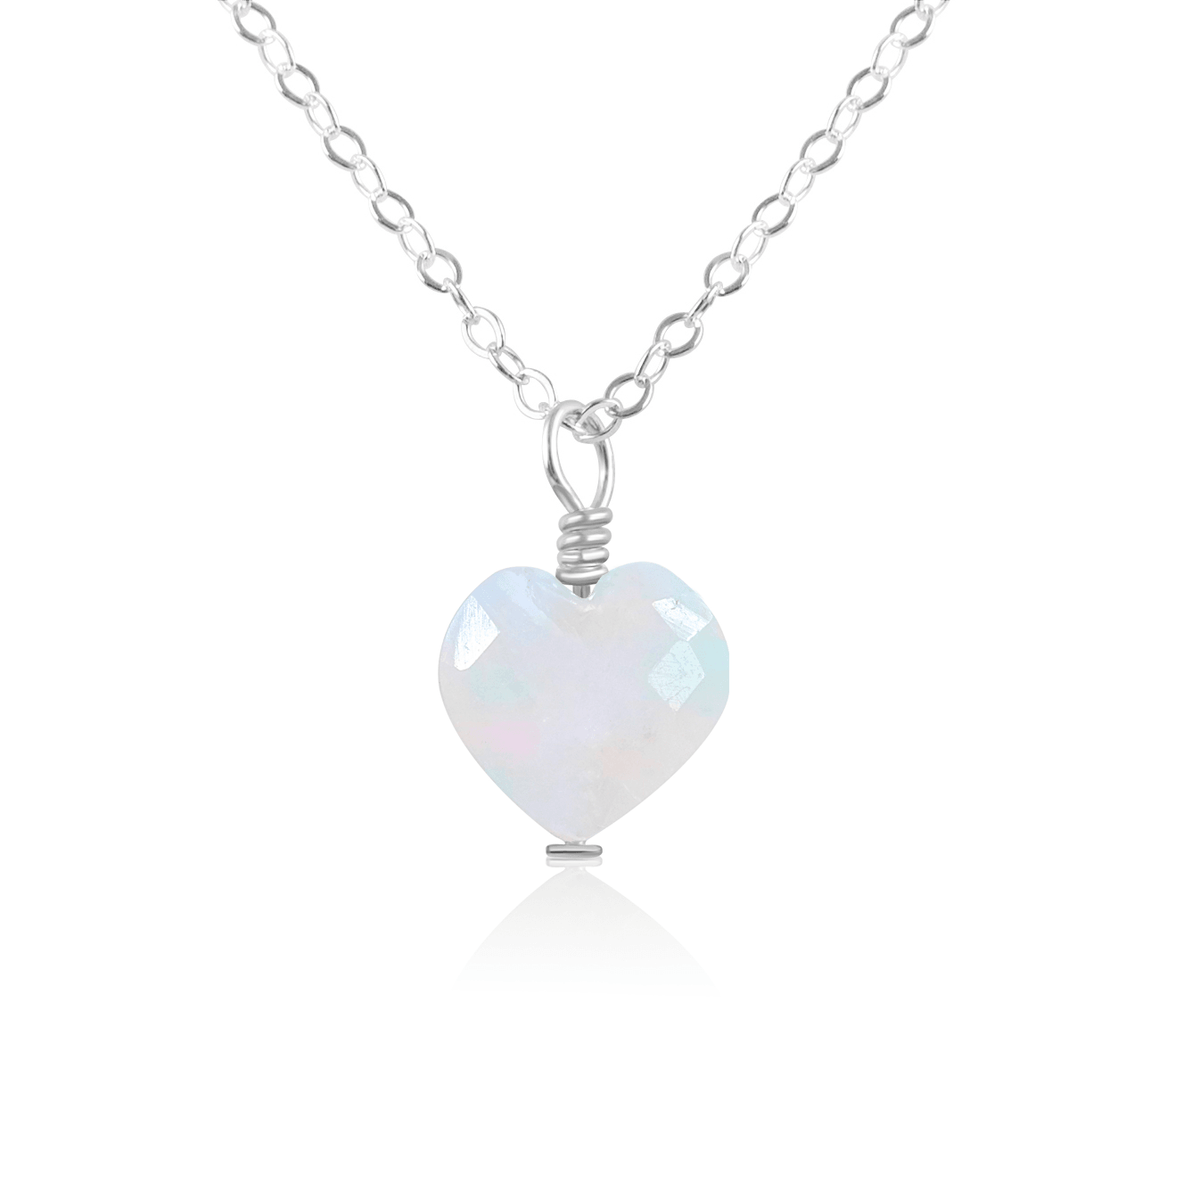 Rainbow Moonstone Crystal Heart Pendant Necklace - Rainbow Moonstone Crystal Heart Pendant Necklace - Sterling Silver / Cable - Luna Tide Handmade Crystal Jewellery